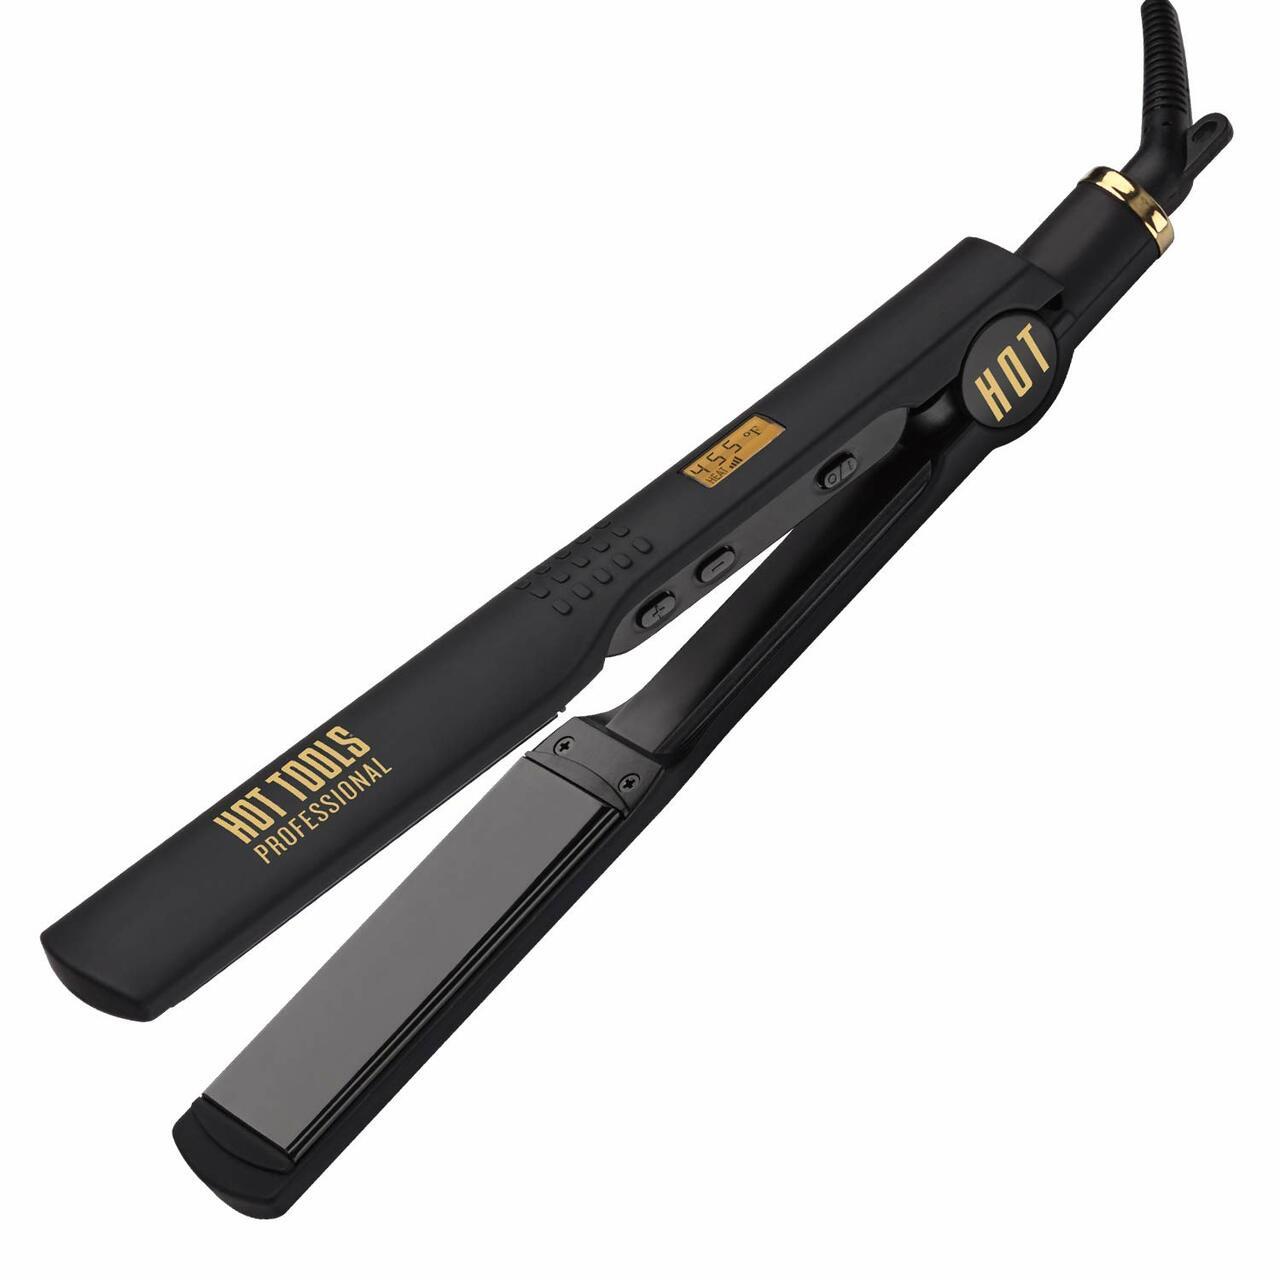 Hot Tools Black Gold 1.25 Digital Salon Flat Iron